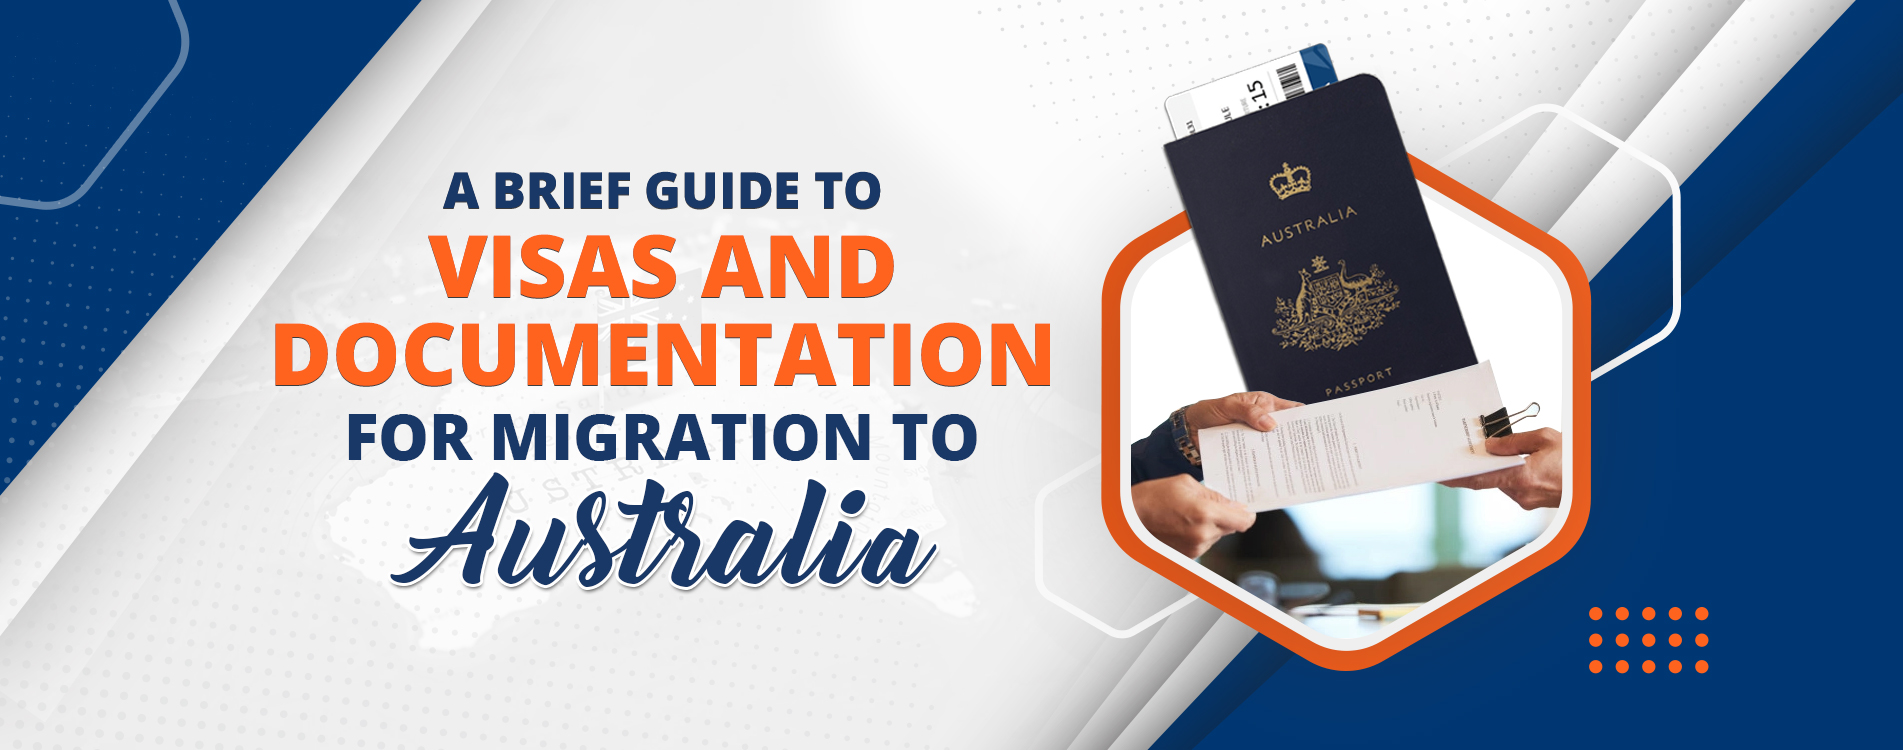 A Brief Guide to Visas and Documentation for Migration to Australia